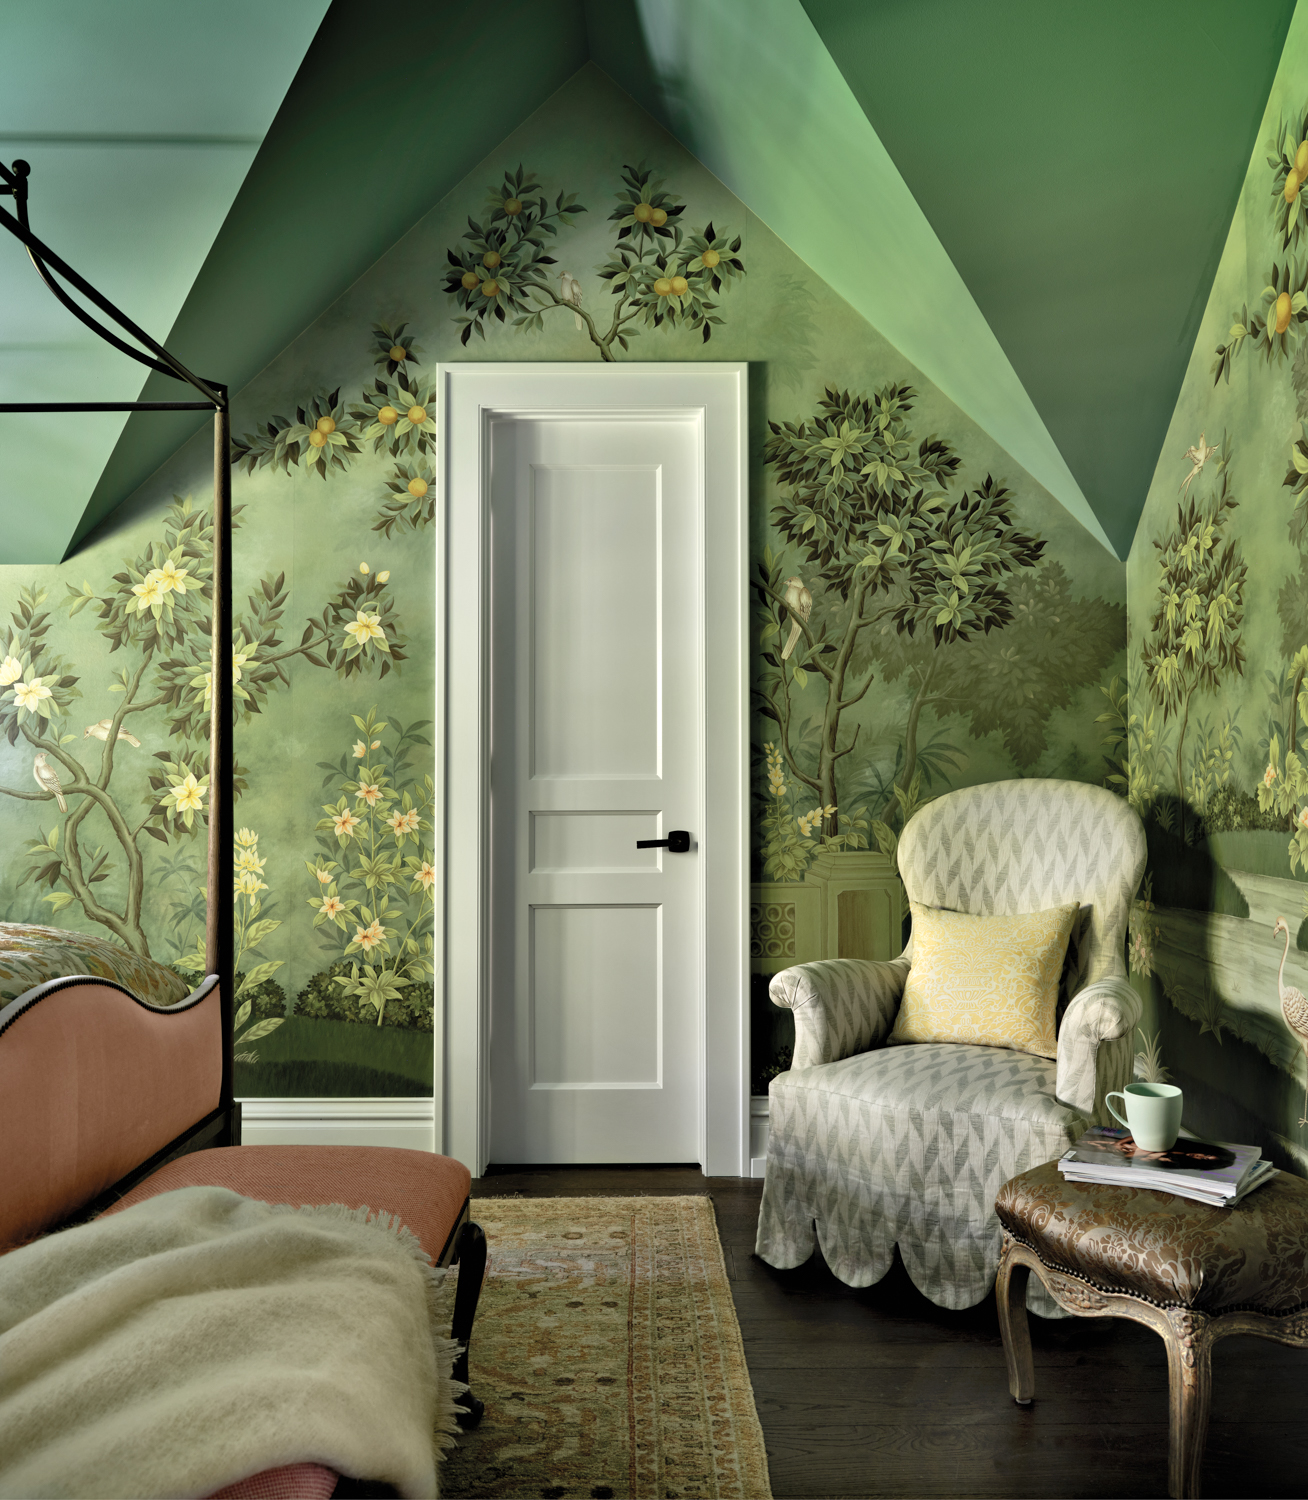 Bedroom with floral garden mural...